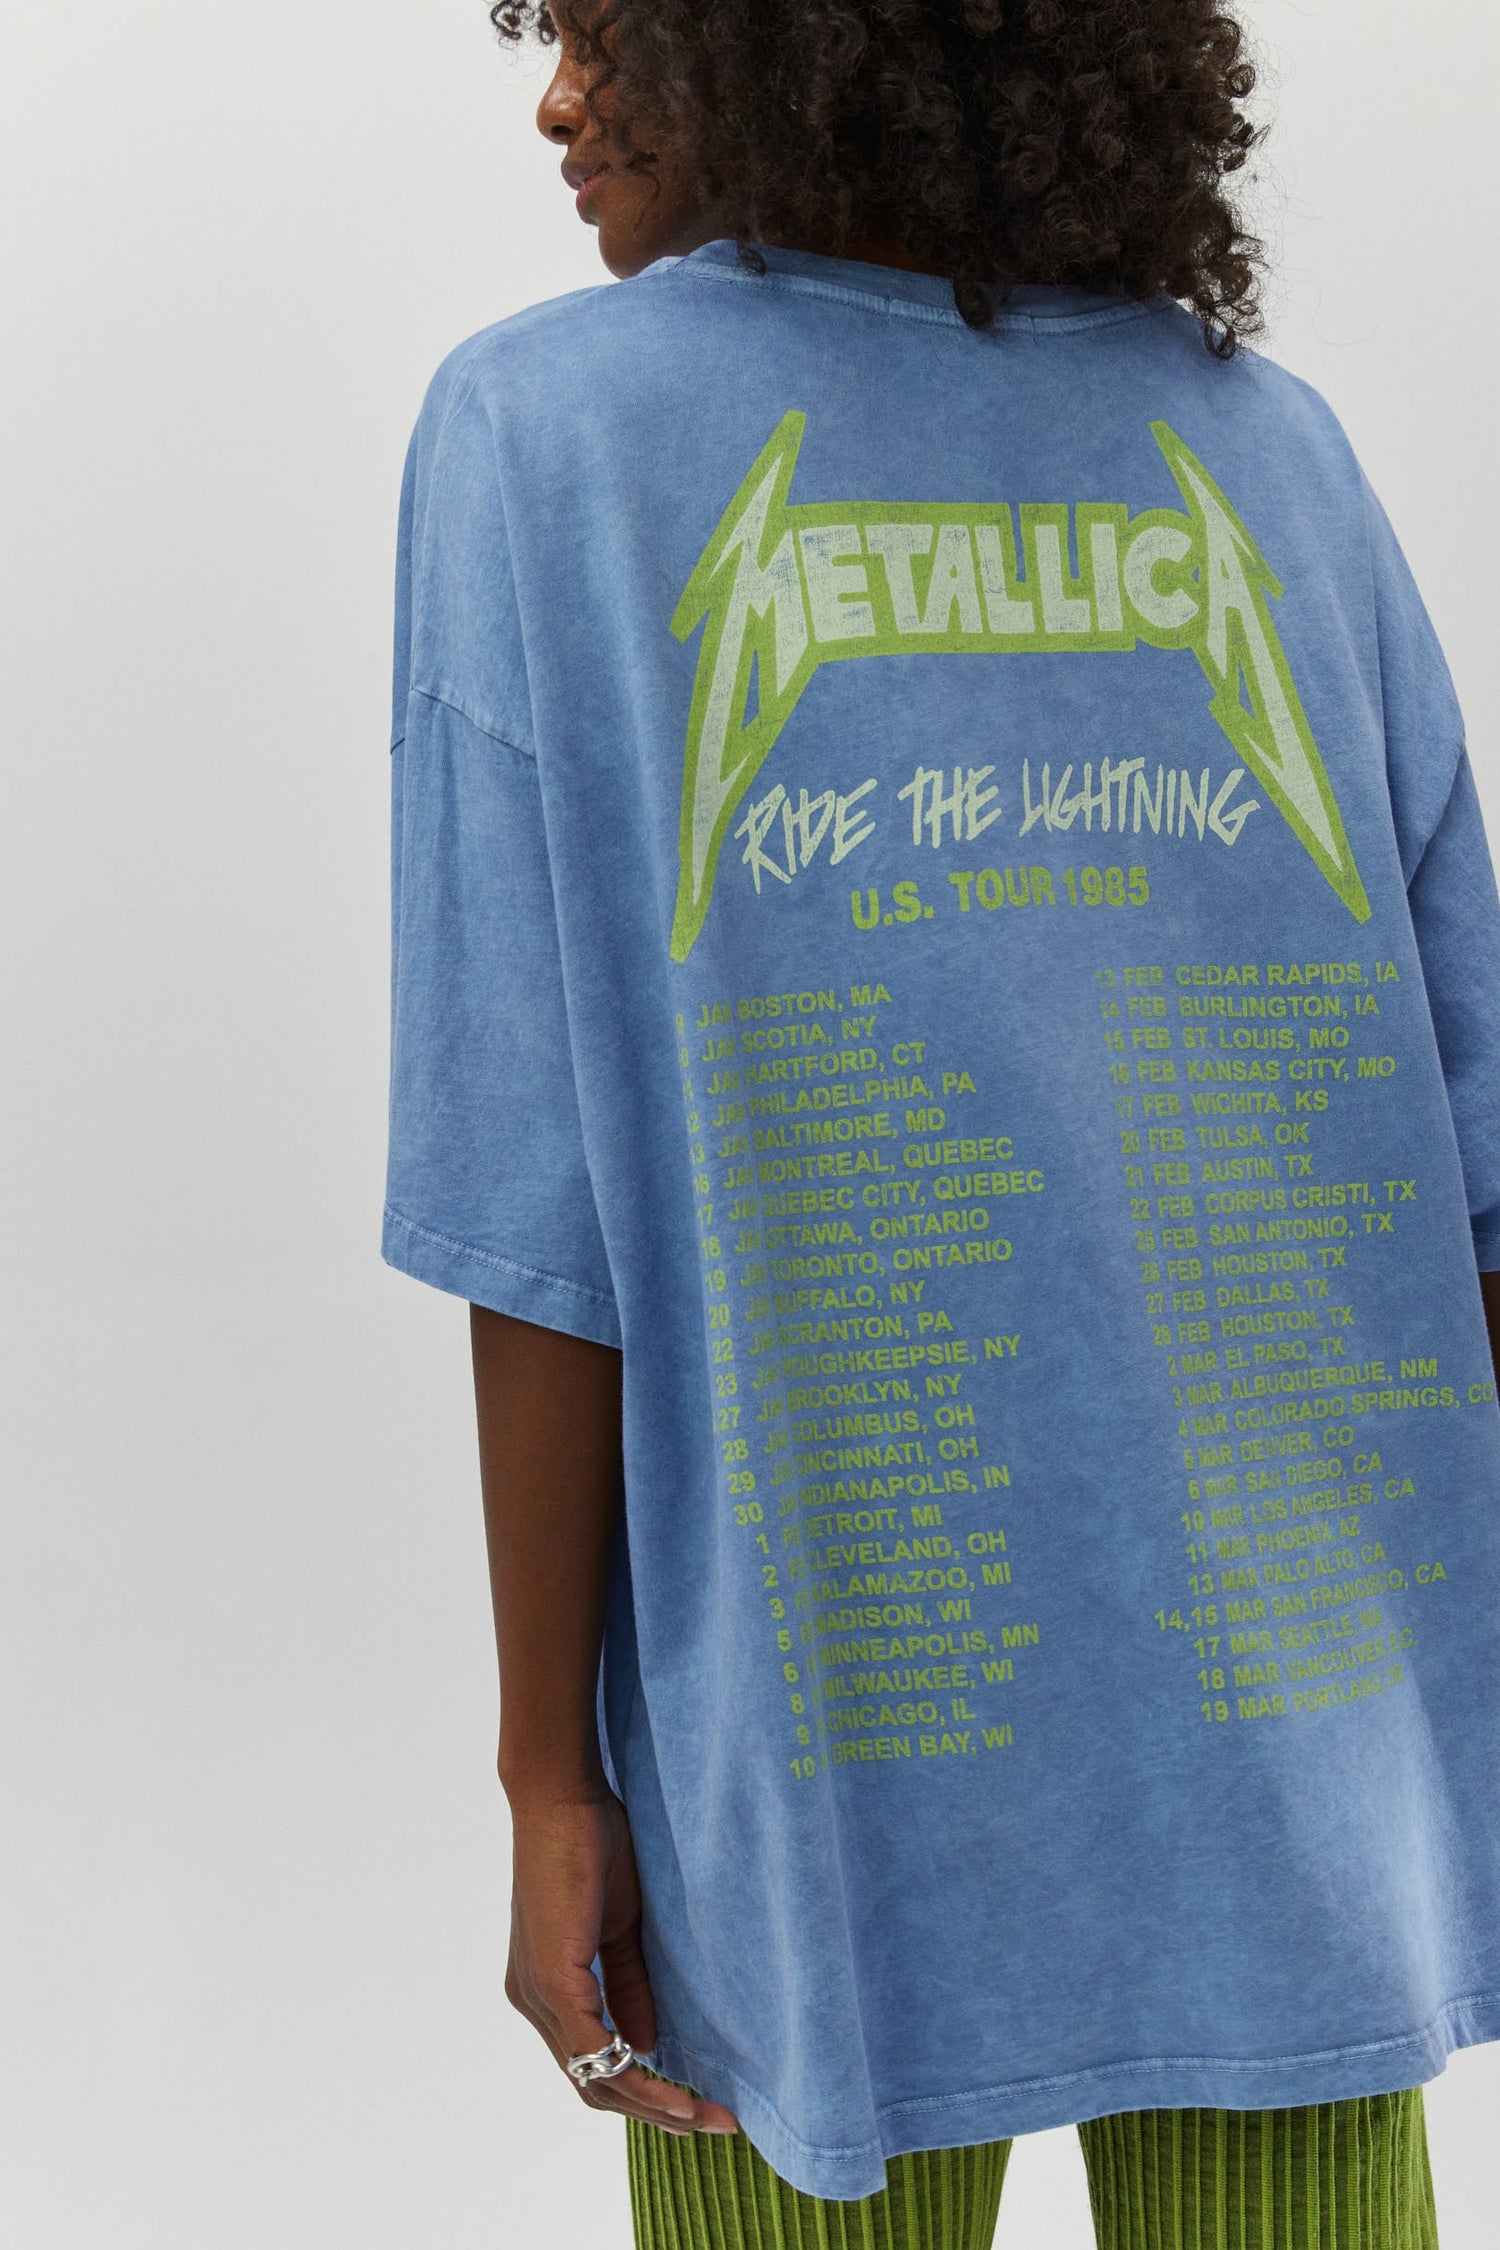 Metallica Ride The Lightning Tracklisting T-Shirt